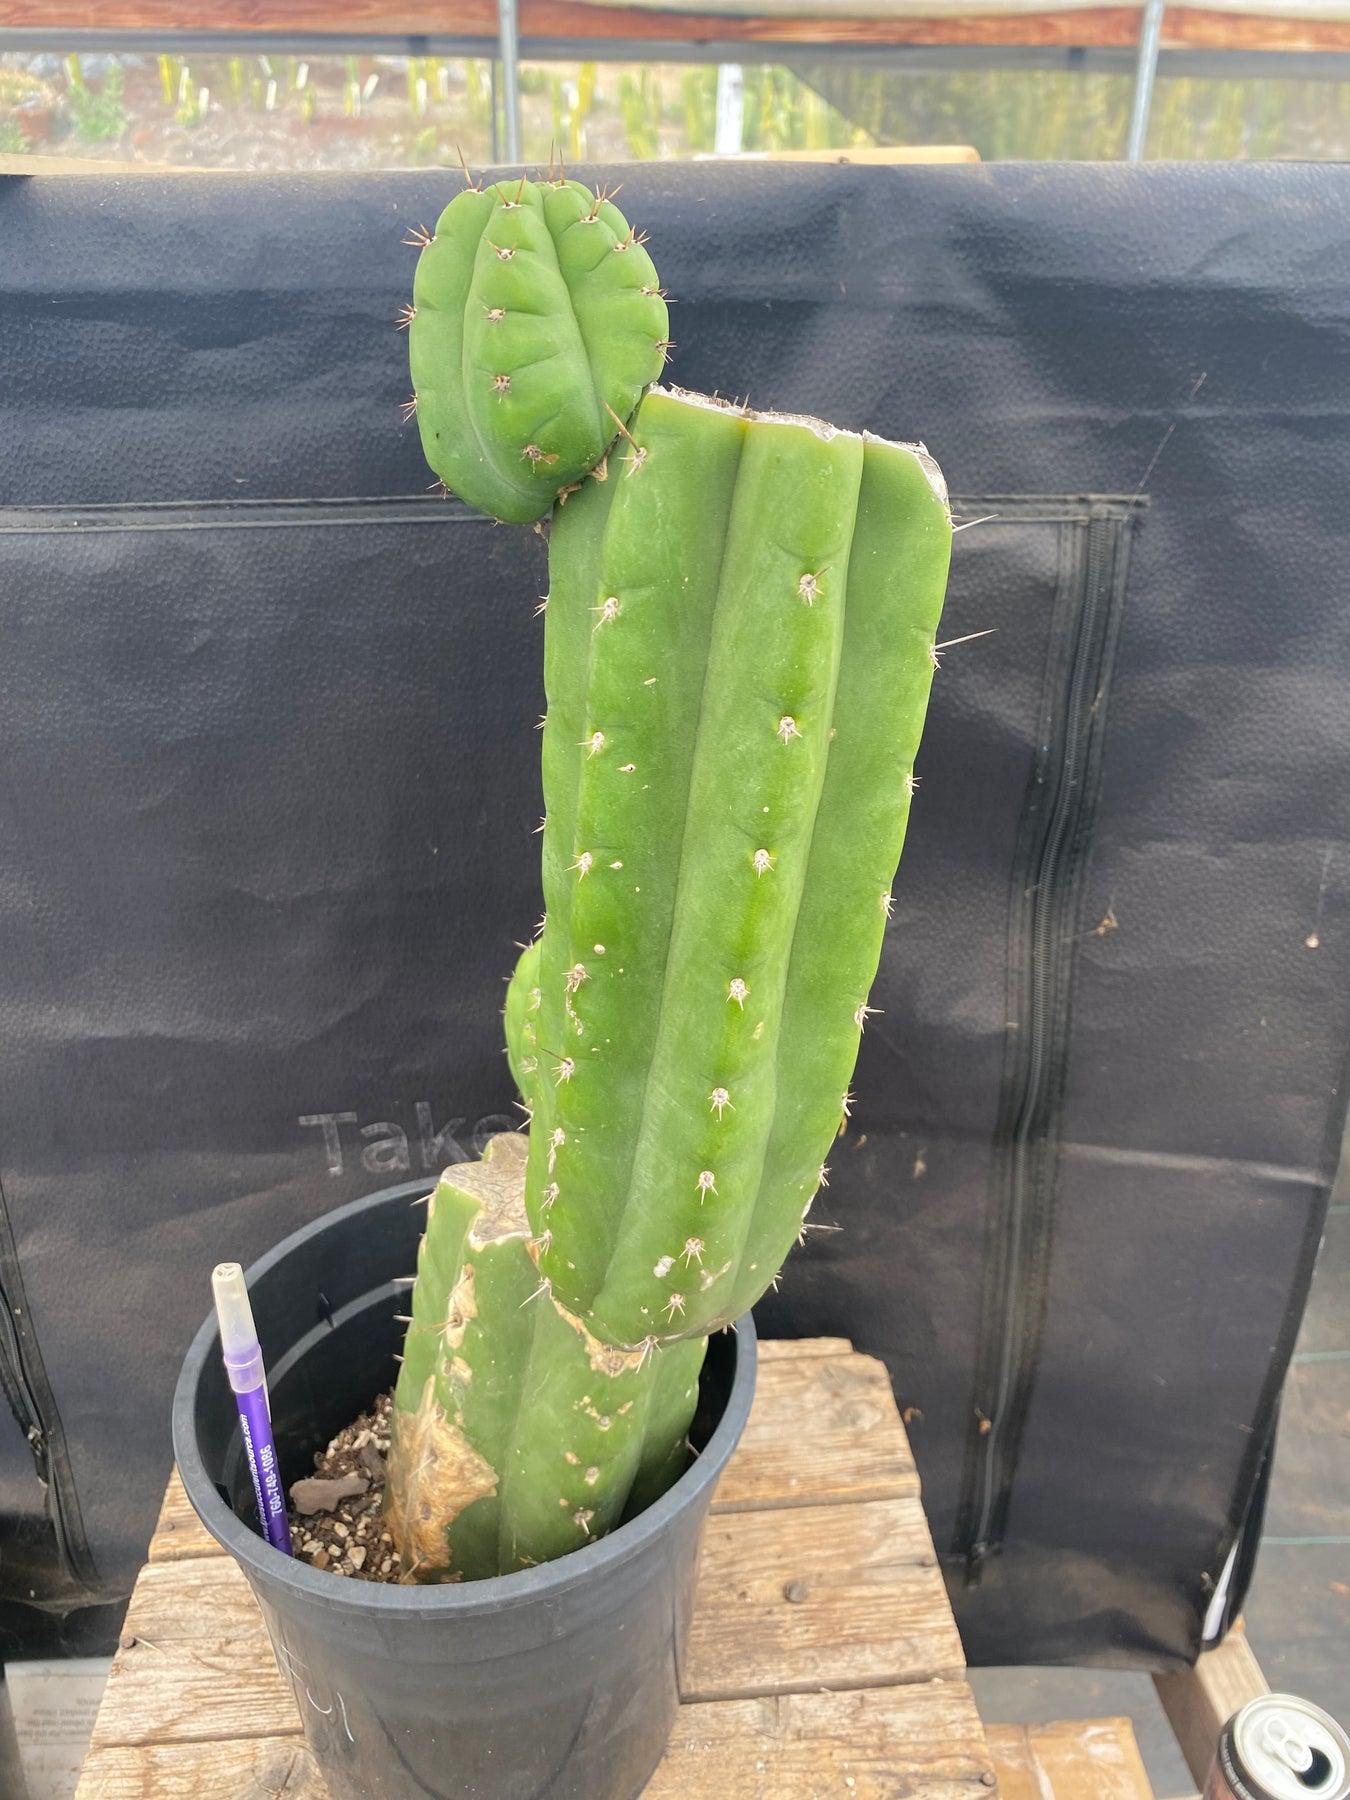 #EC238 EXACT Trichocereus Pachanoi "Awful" Ornamental Cactus Cutting 16.5"-Cactus - Large - Exact-The Succulent Source